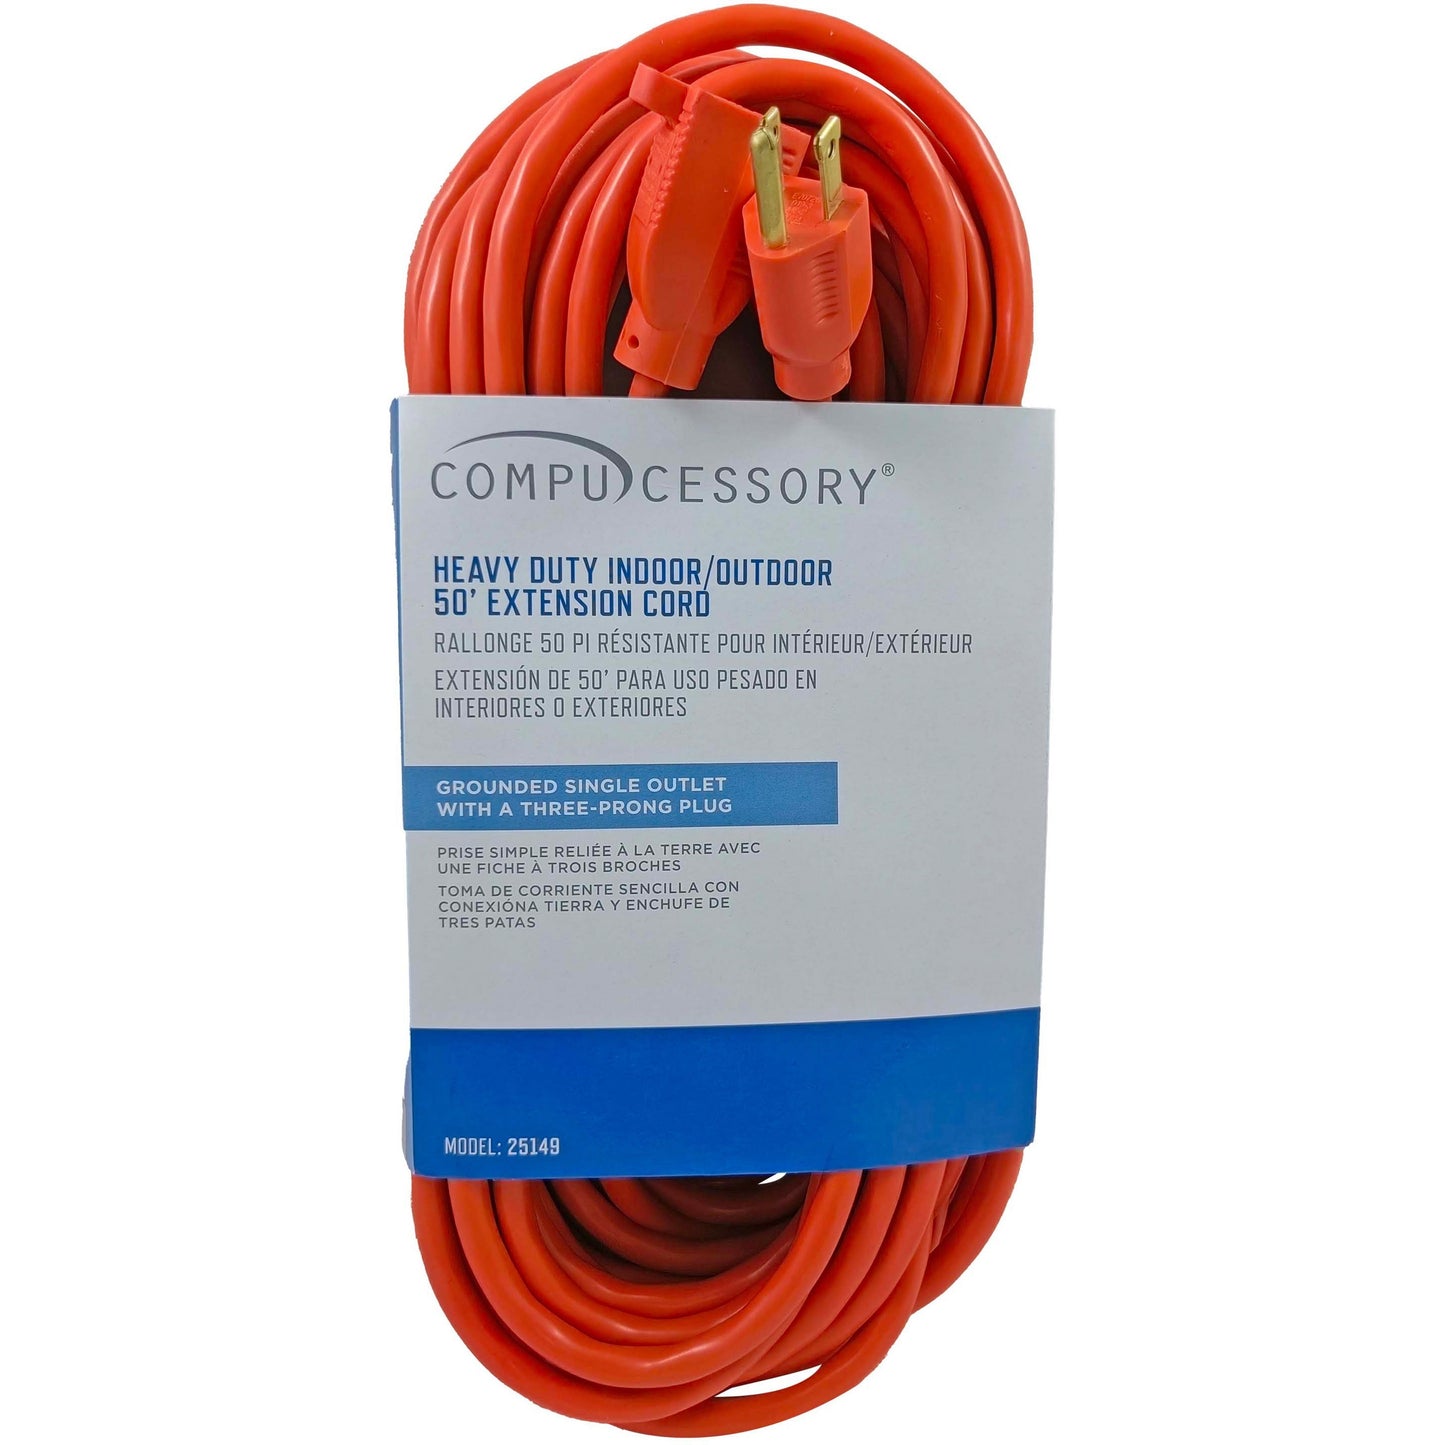 Compucessory Heavy-duty Indoor/Outdoor Extension Cord